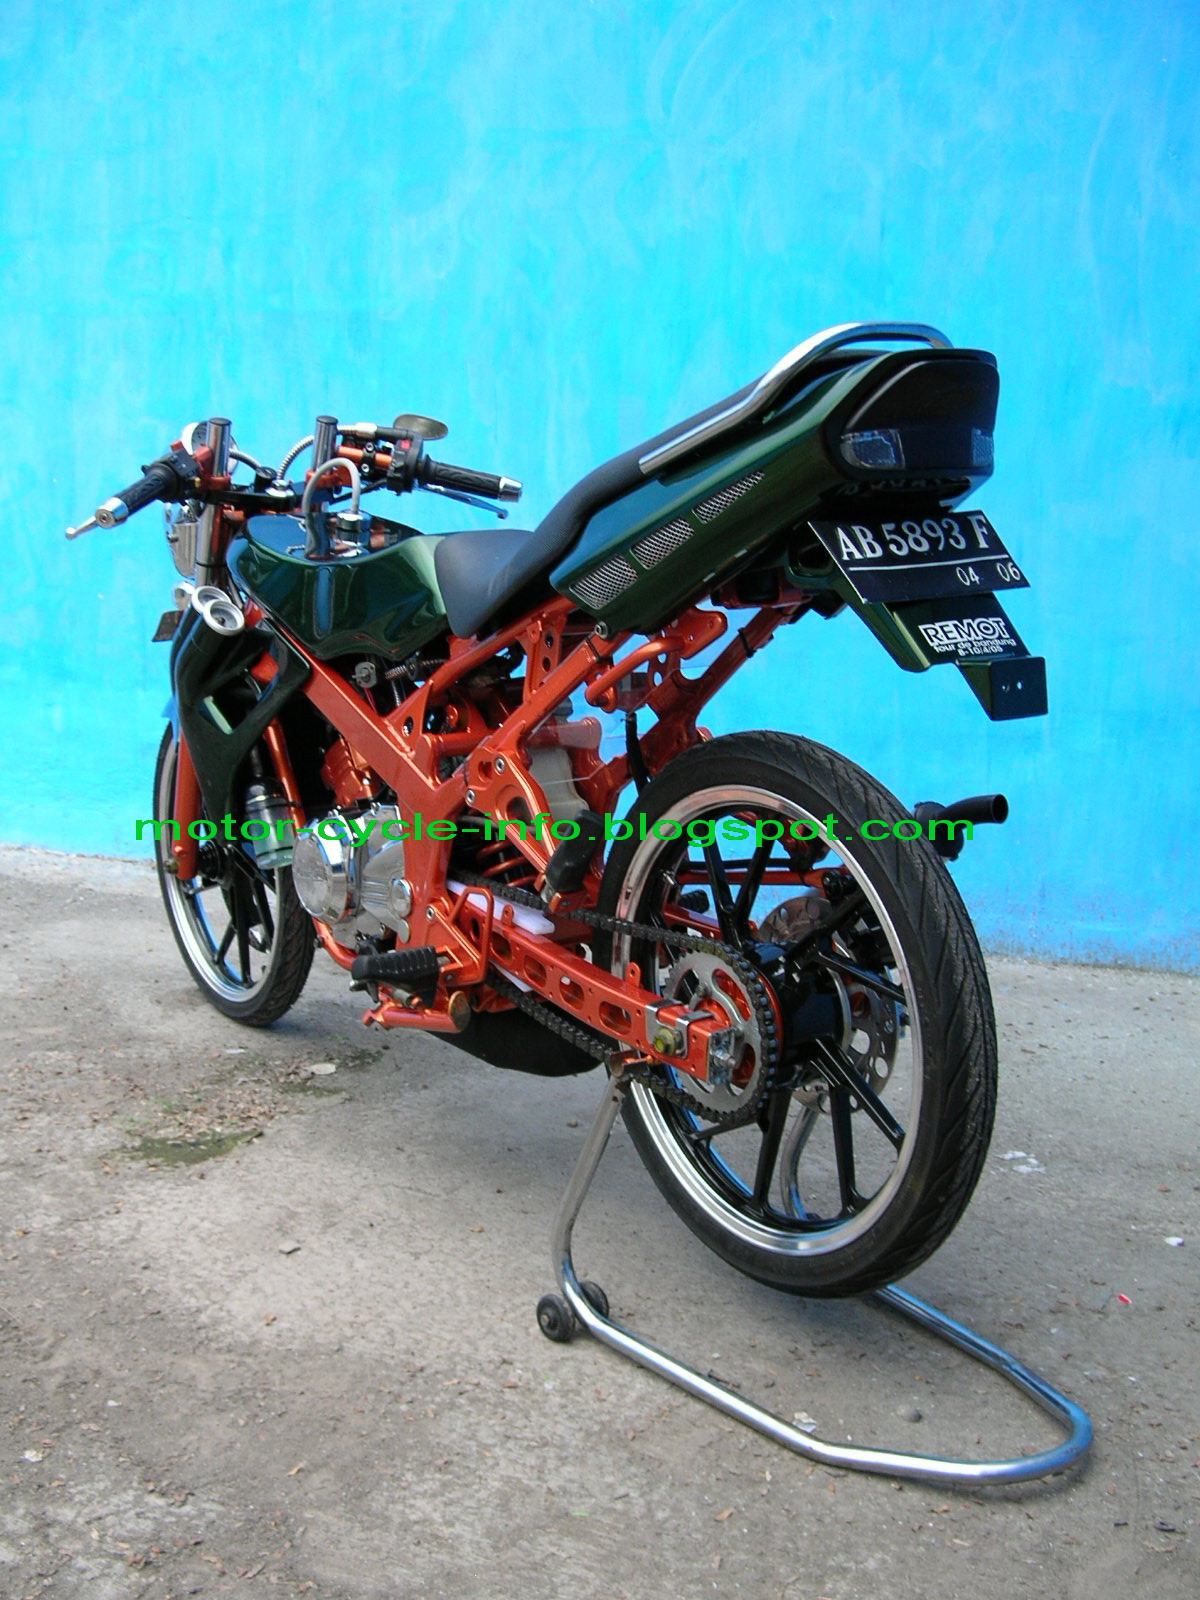 wallpaper ninja motore,veicolo terrestre,veicolo,veicolo a motore,motociclo,auto